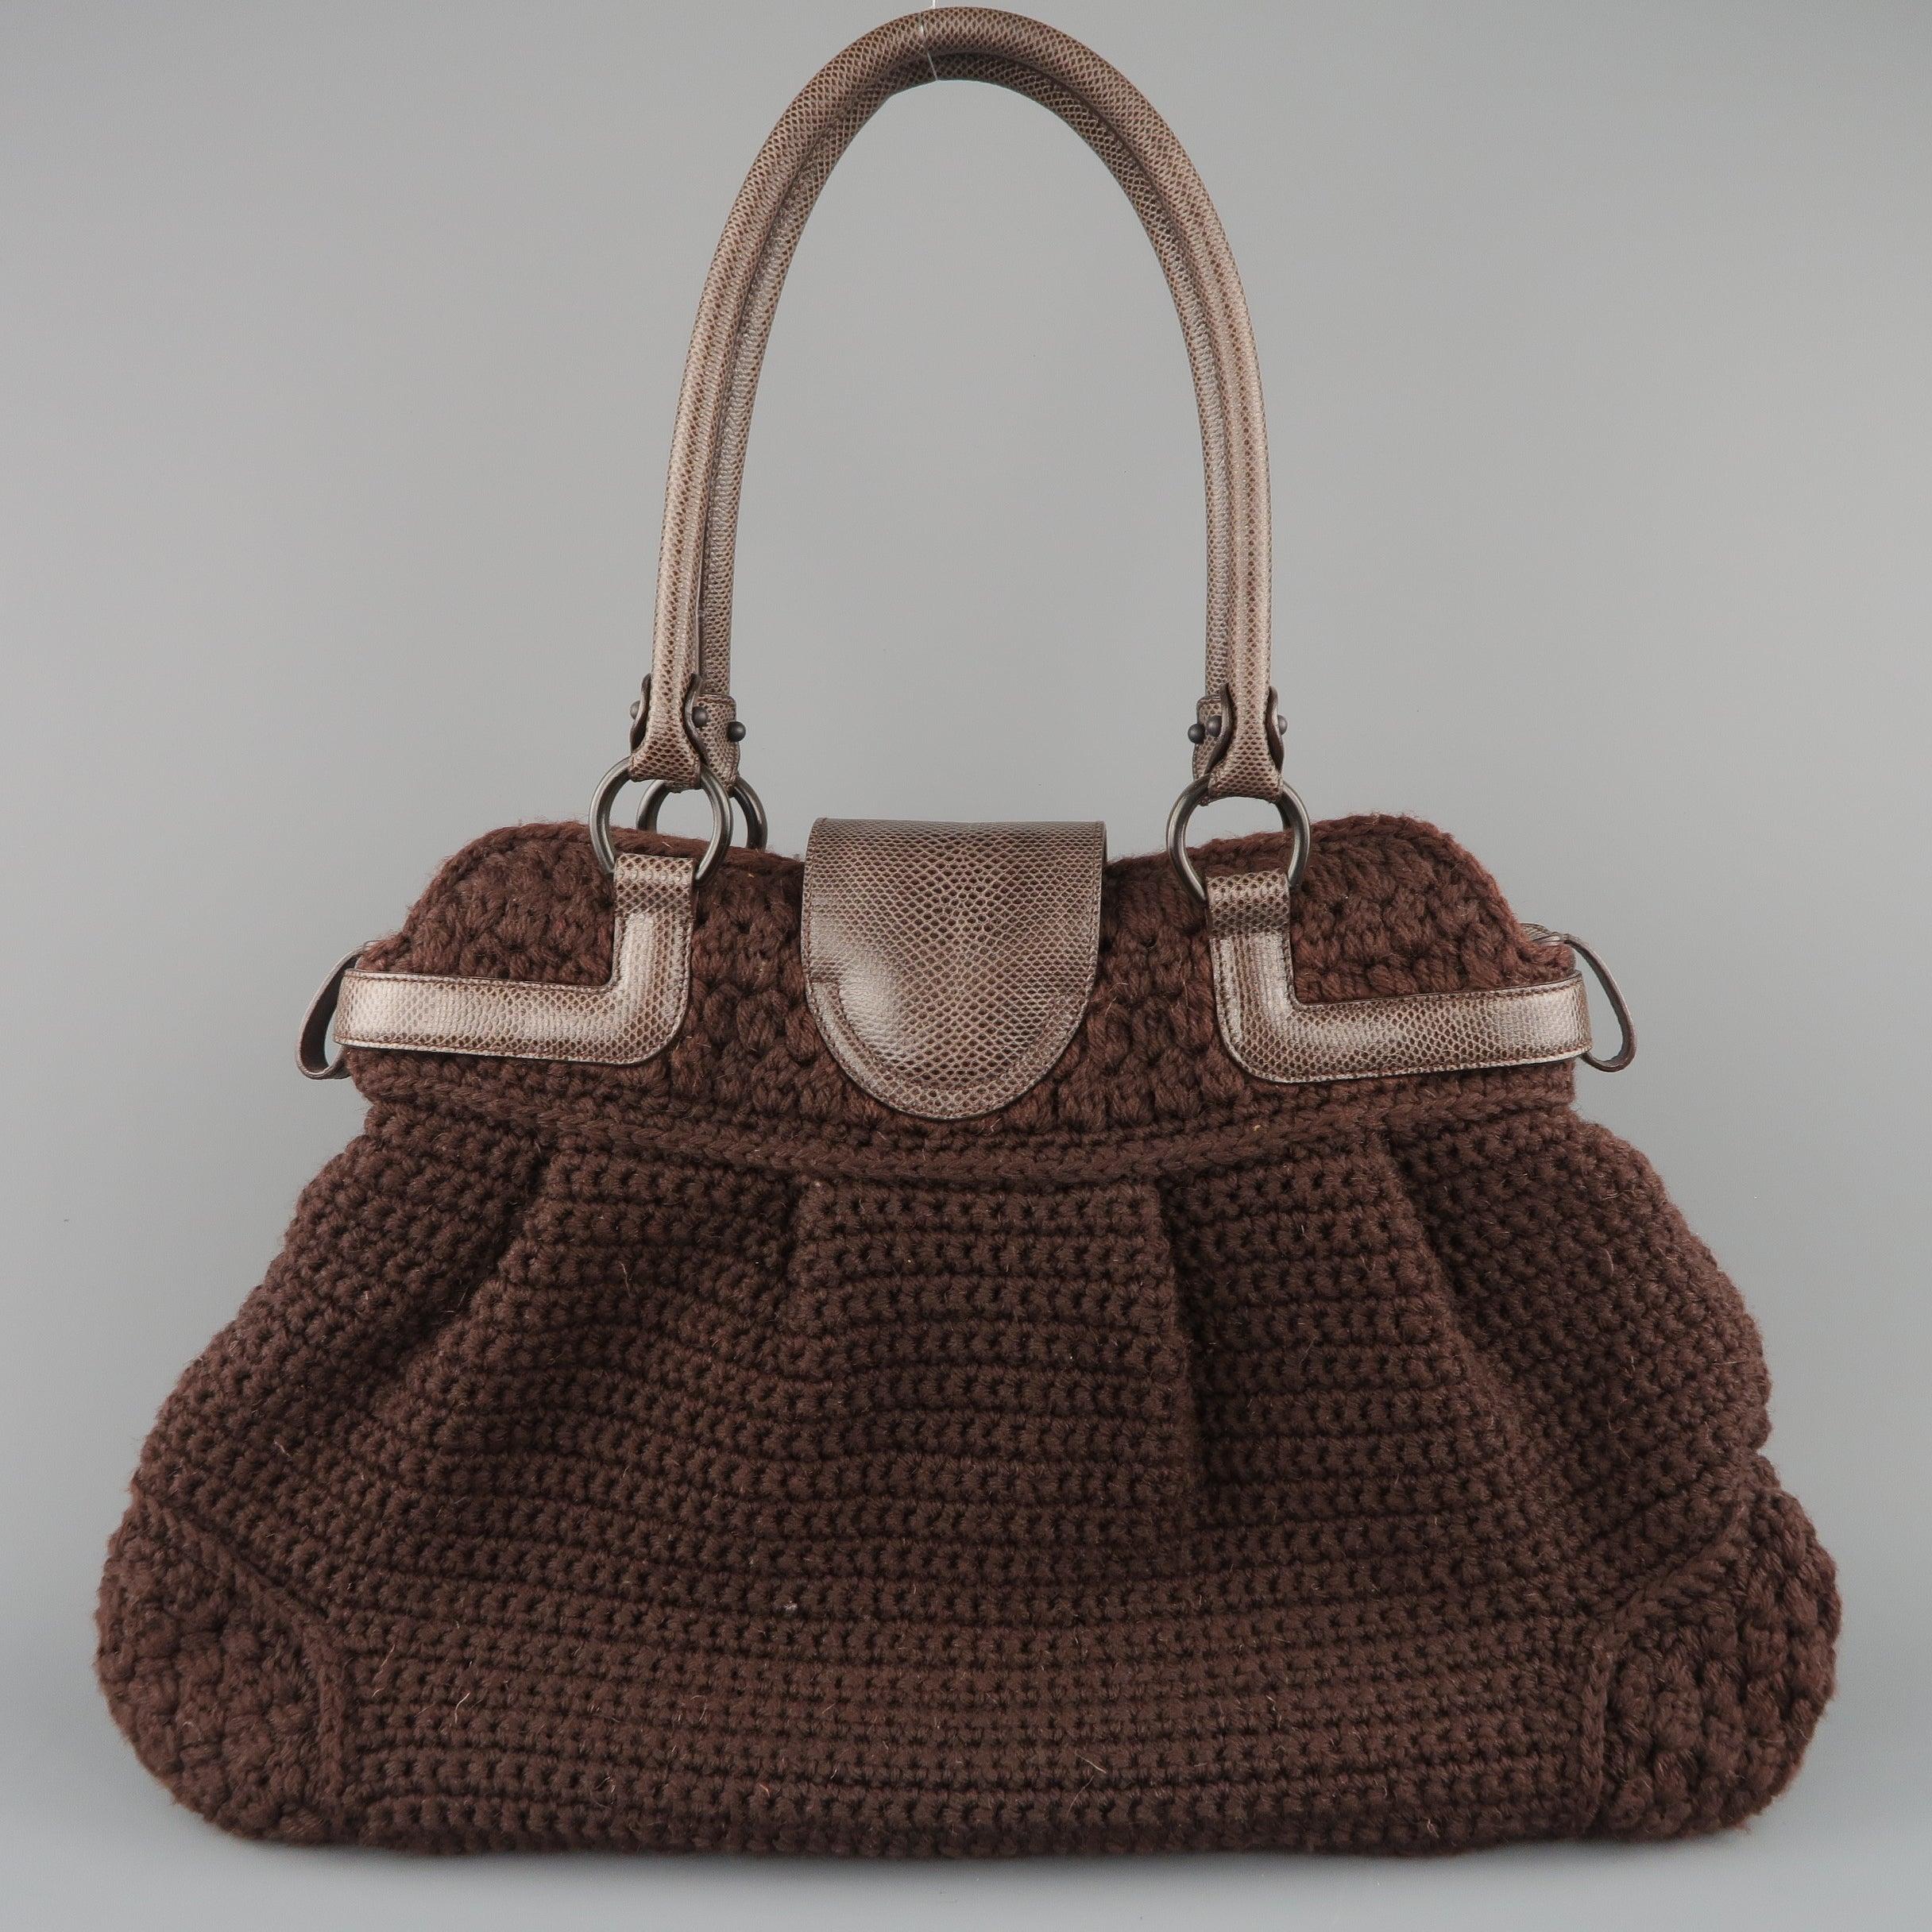 SALVATORE FERRAGAMO Brown Crochet Knit Leather Top Handles Handbag For Sale 4